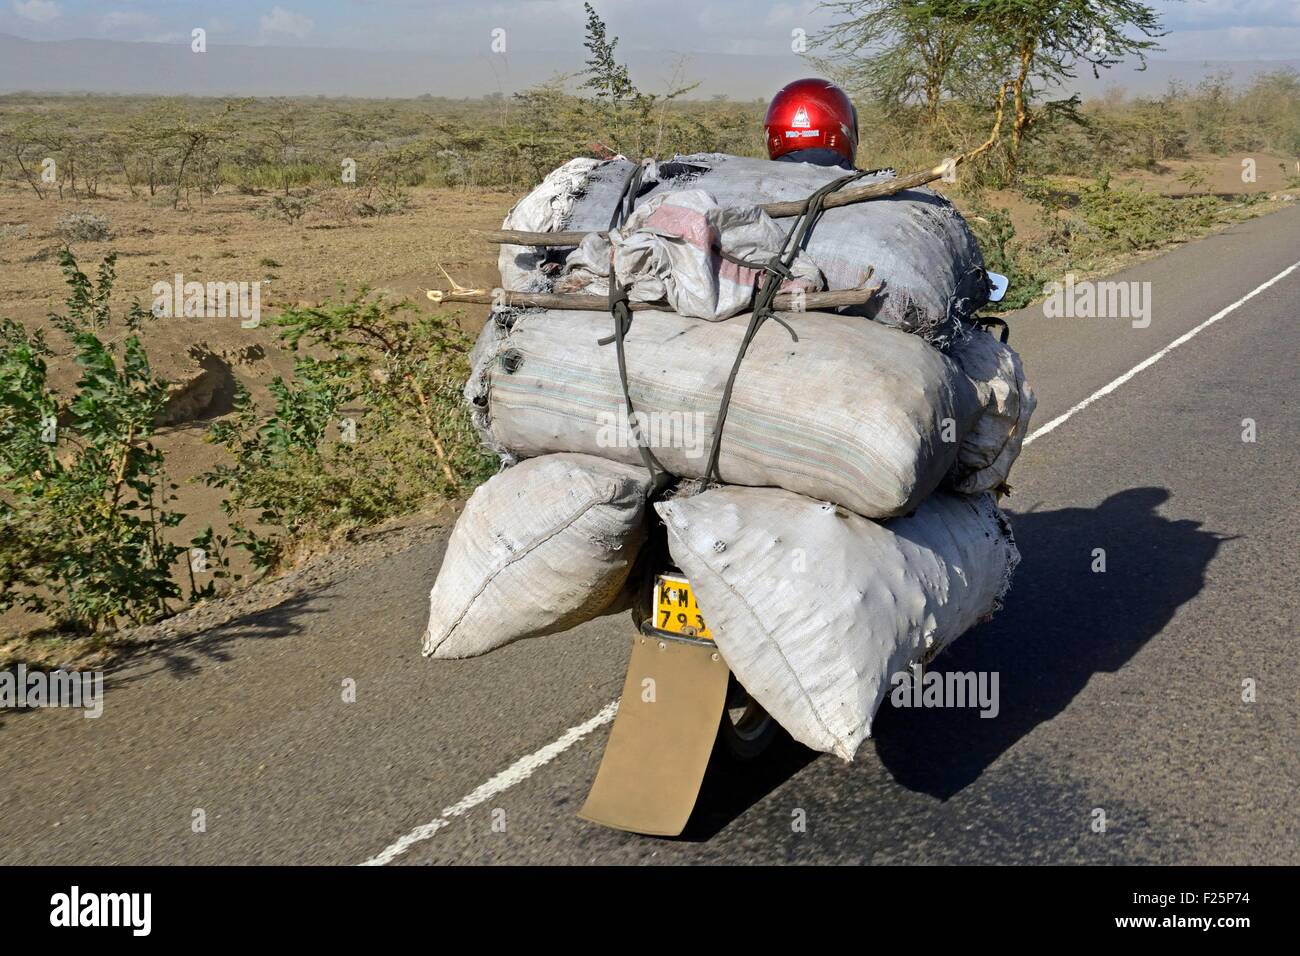 Kenya, Nairobi, loading and transportation of bulky motorcycle bags Stock Photo